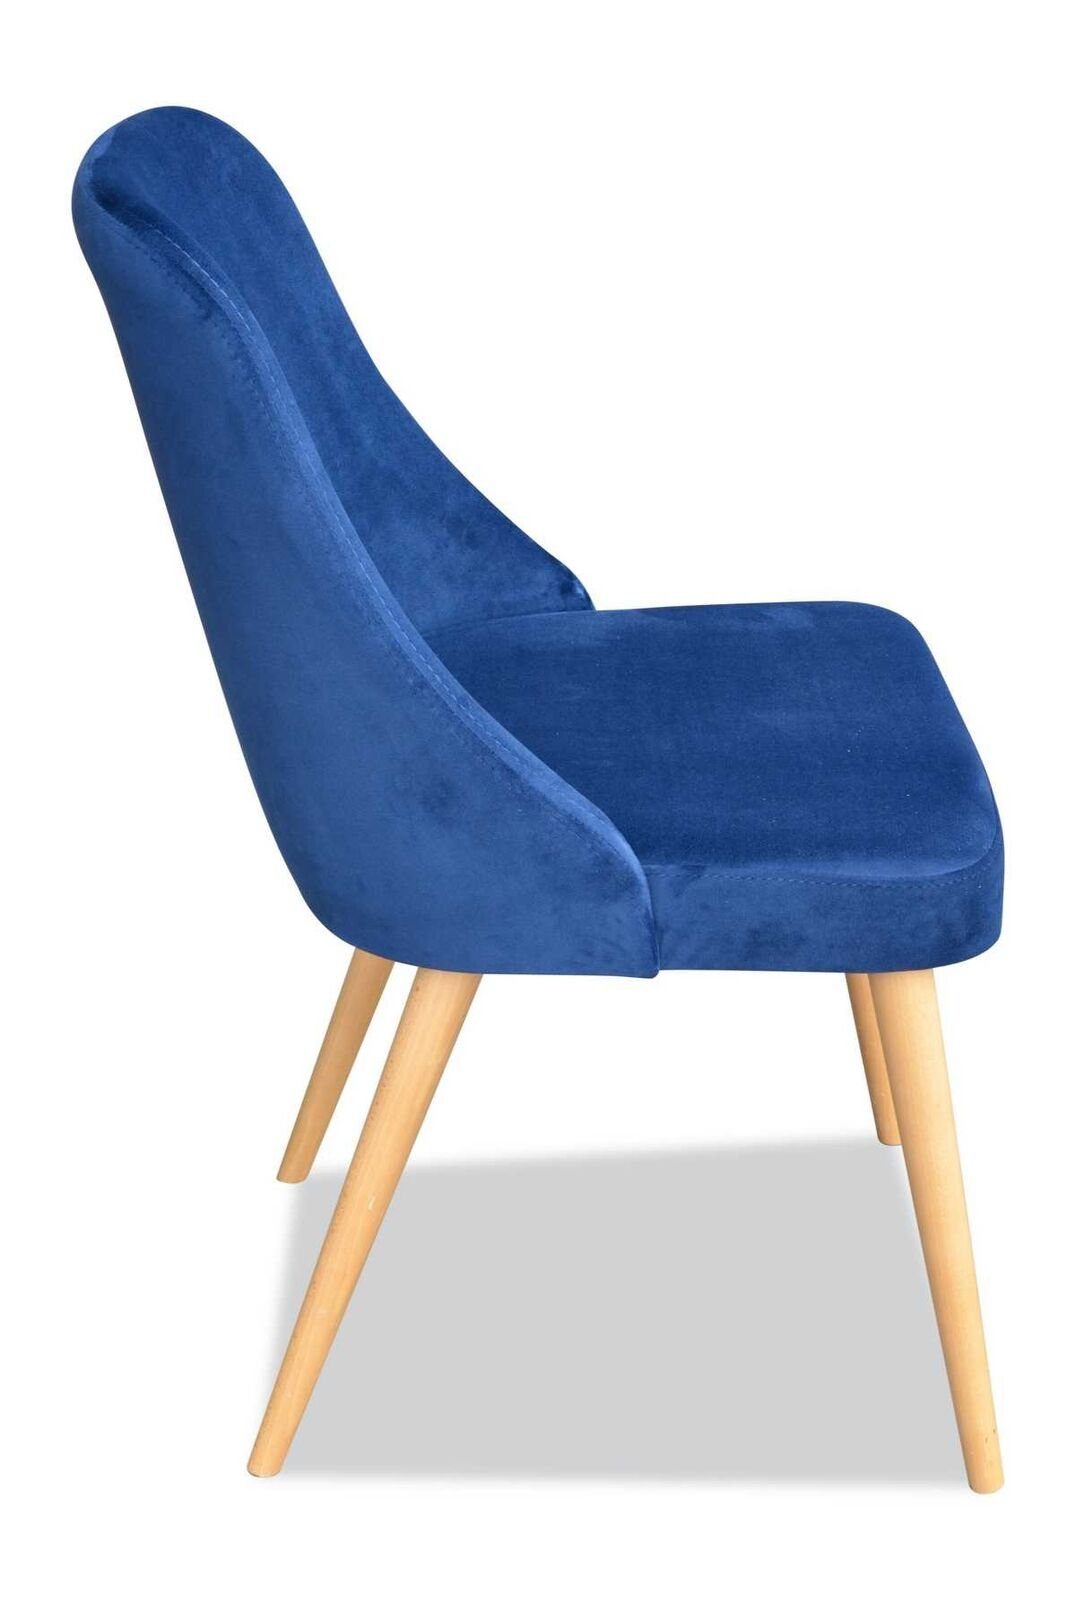 JVmoebel Stuhl Esszimmer Stoff Grün Stuhl Holzstuhl Modern Holz Stühle Sitz St) (1 Blau Polster